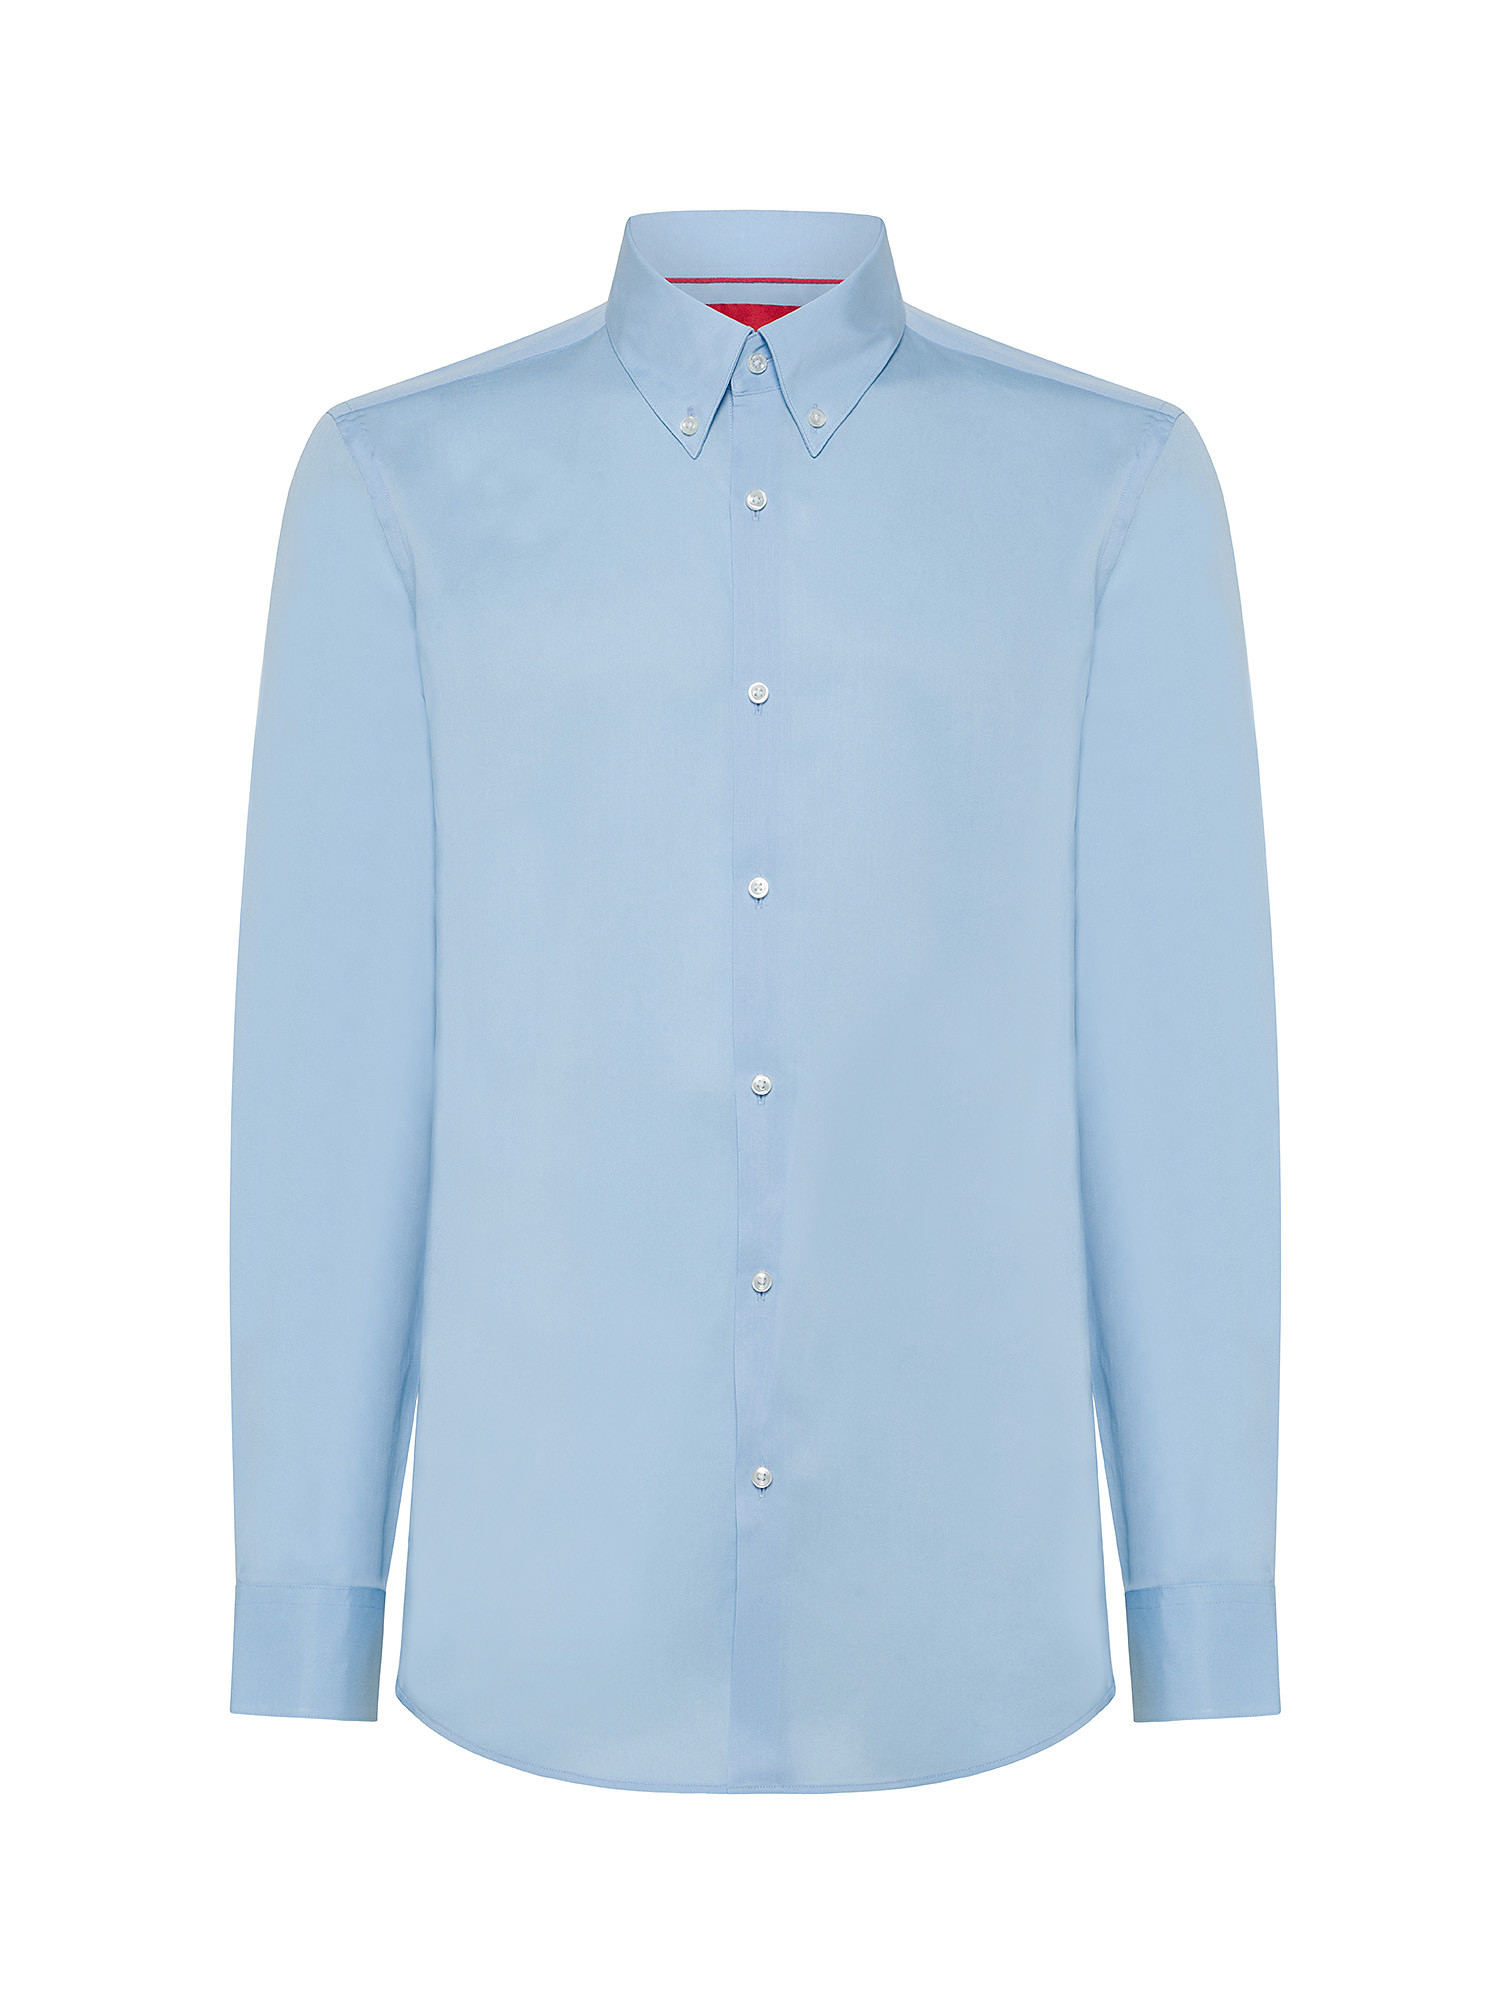 Hugo - Camicia slim fit, Azzurro, large image number 1